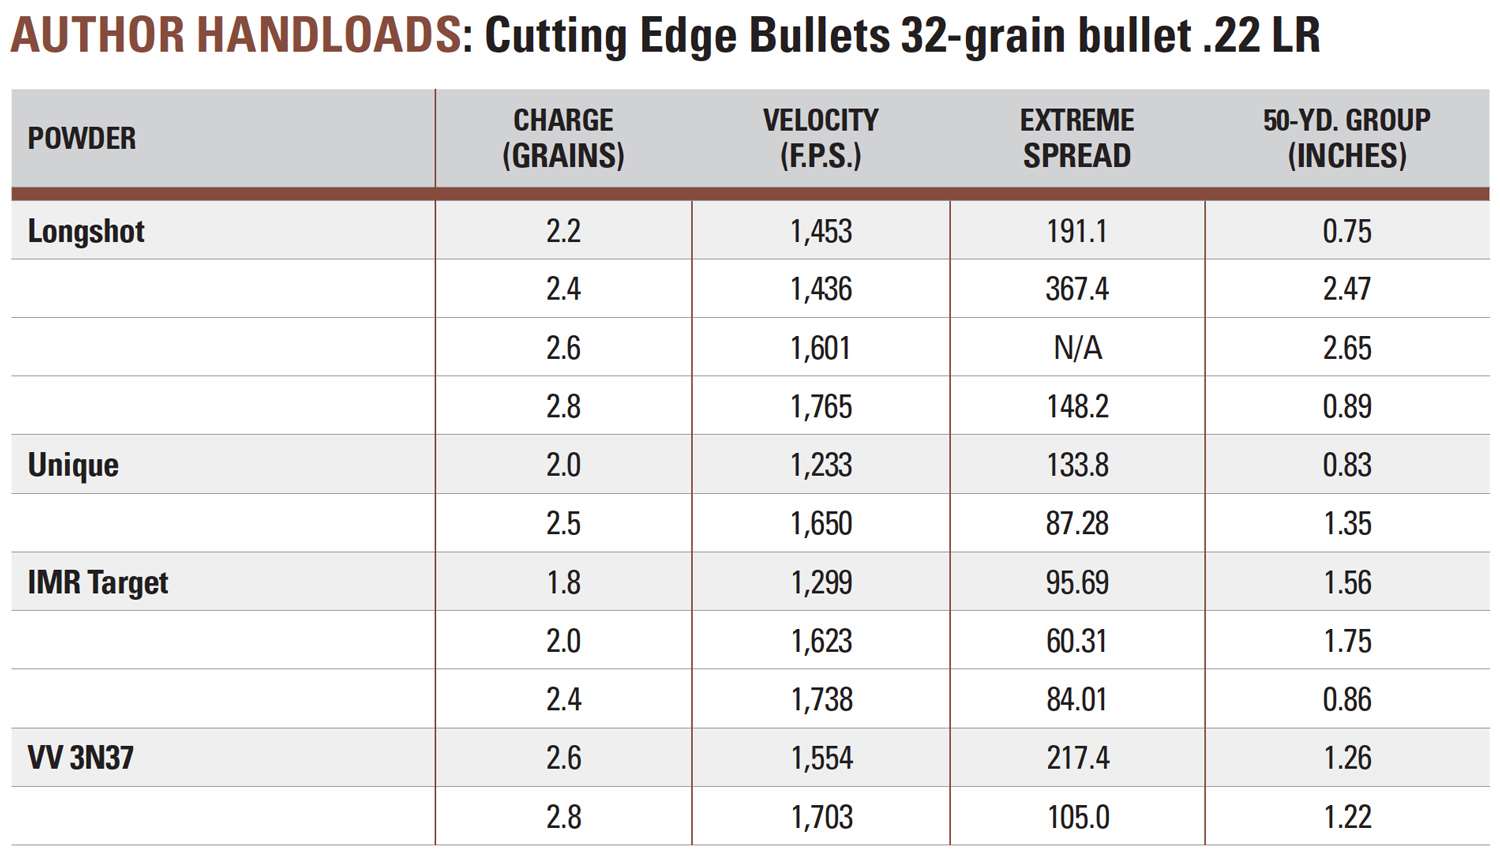 Cutting Edge Bullets 32-grain bullet .22 LR handholds